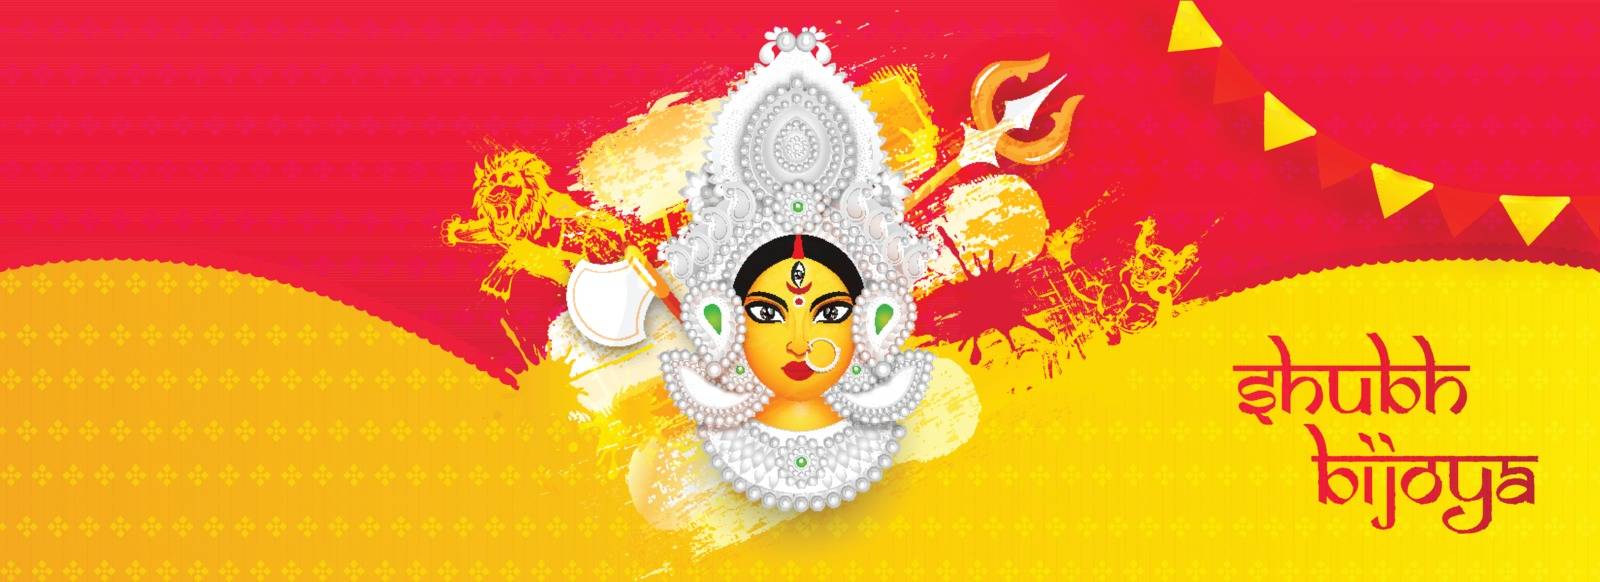 Creative header or banner design with illustration of Hindu Mythological Goddess Durga for Subho Bijoya celebration concept.